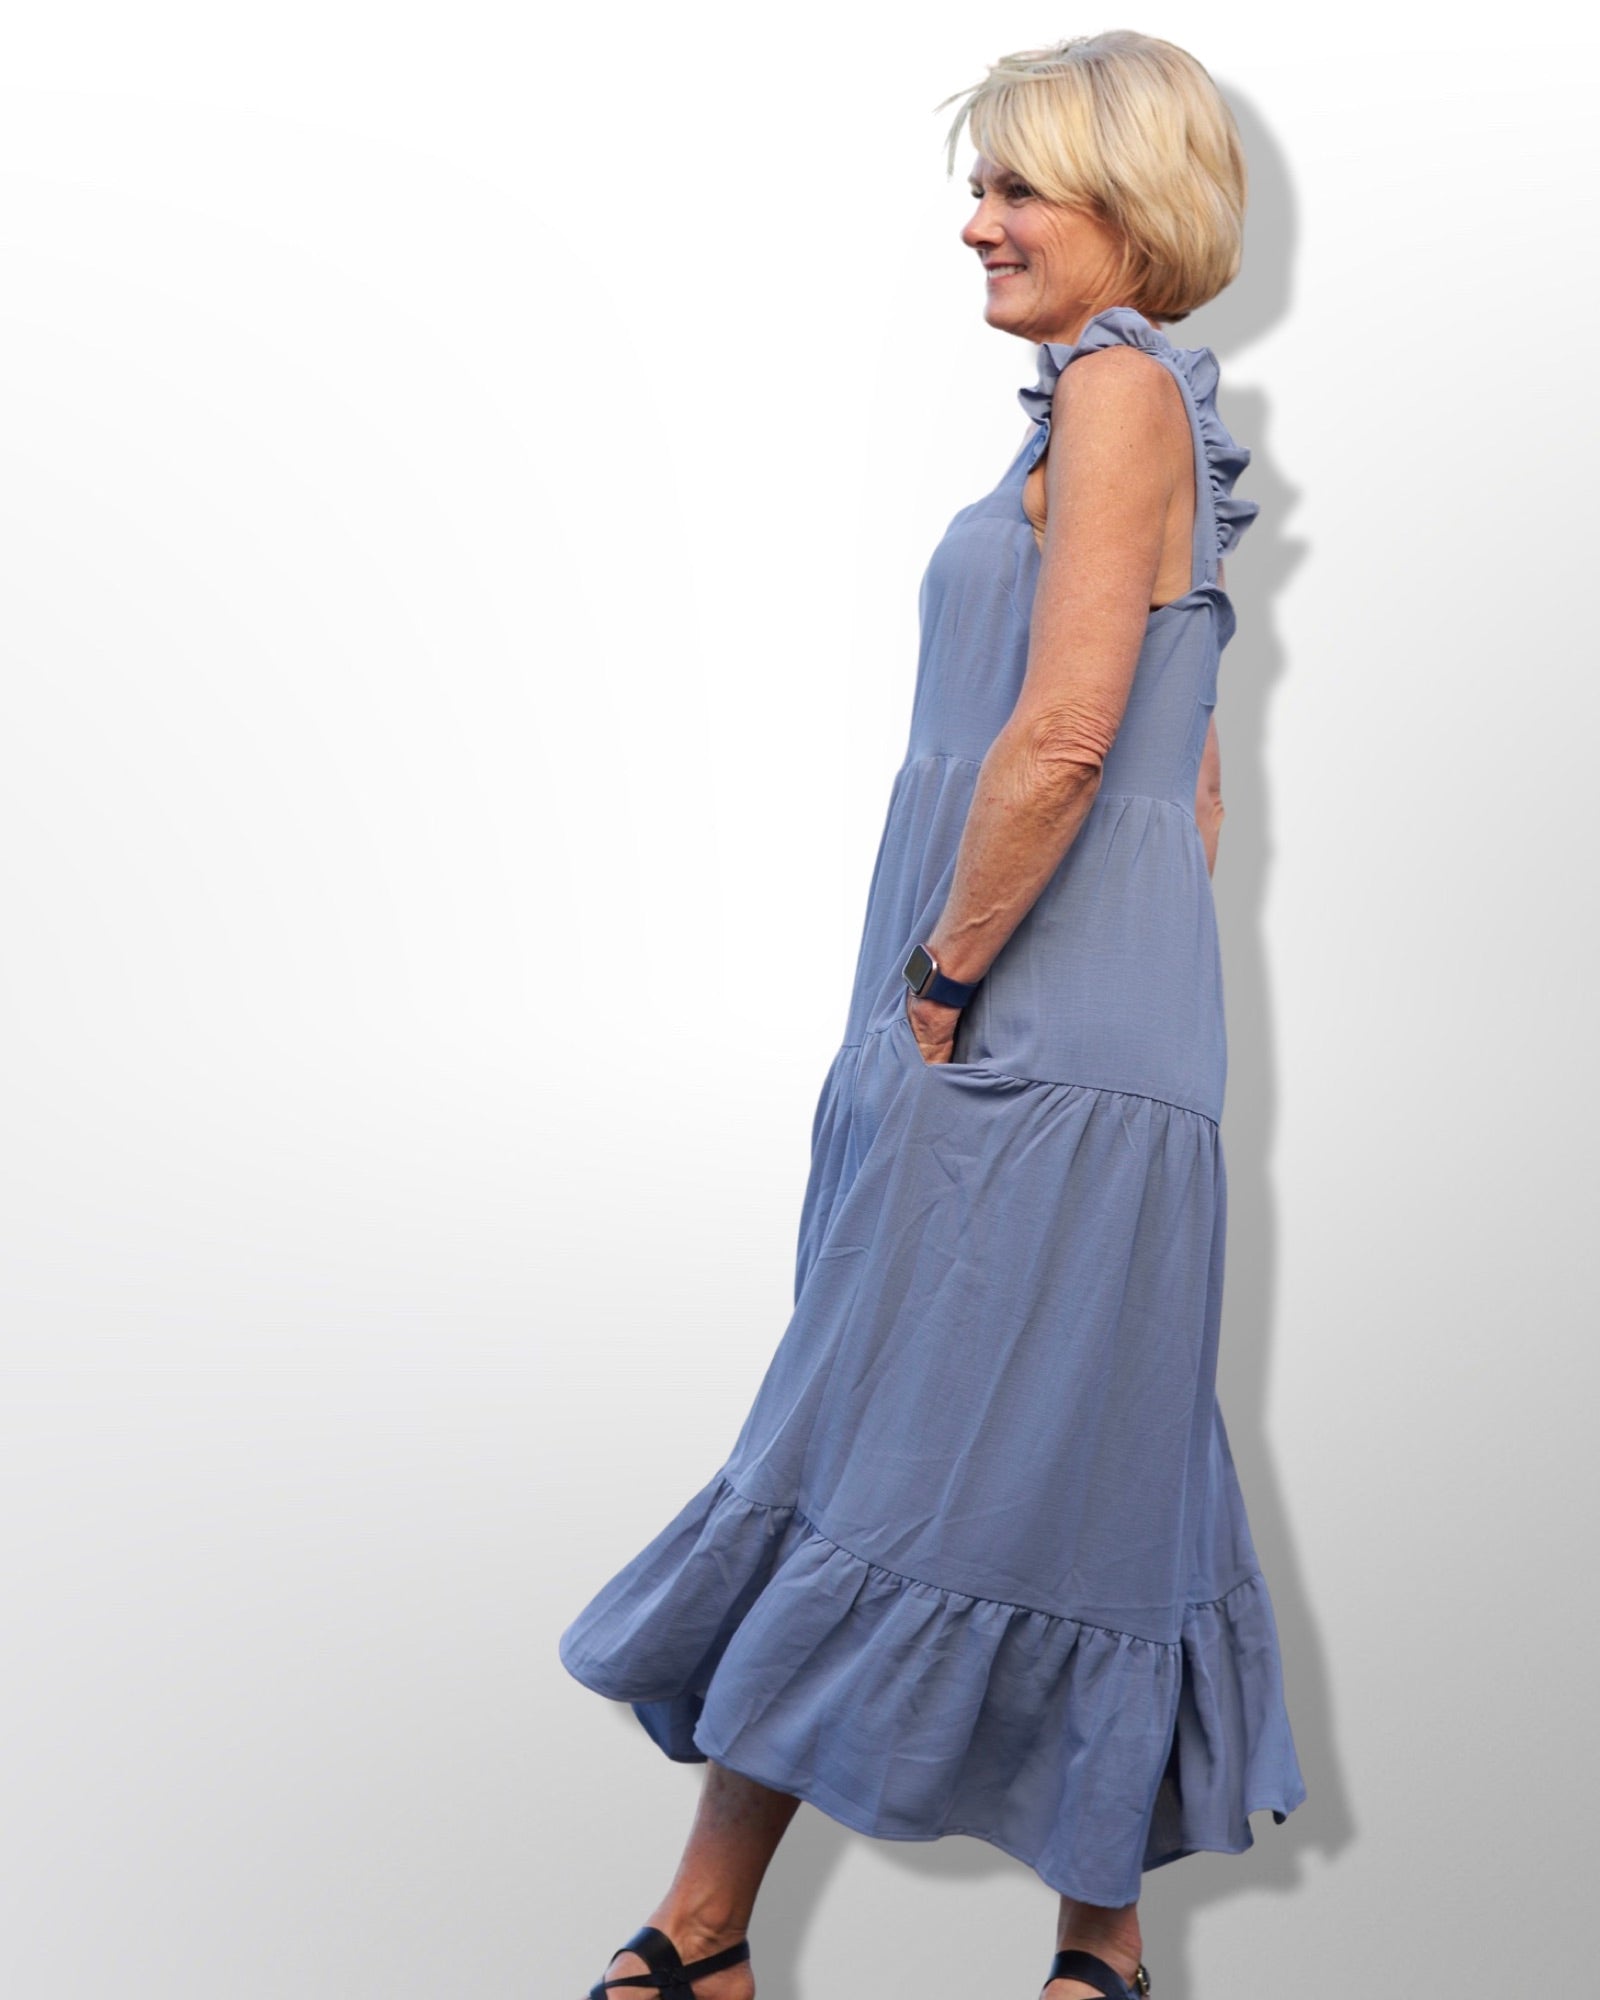 Dusty Blue Ladies Sleeveless Maxi Dress with Pockets